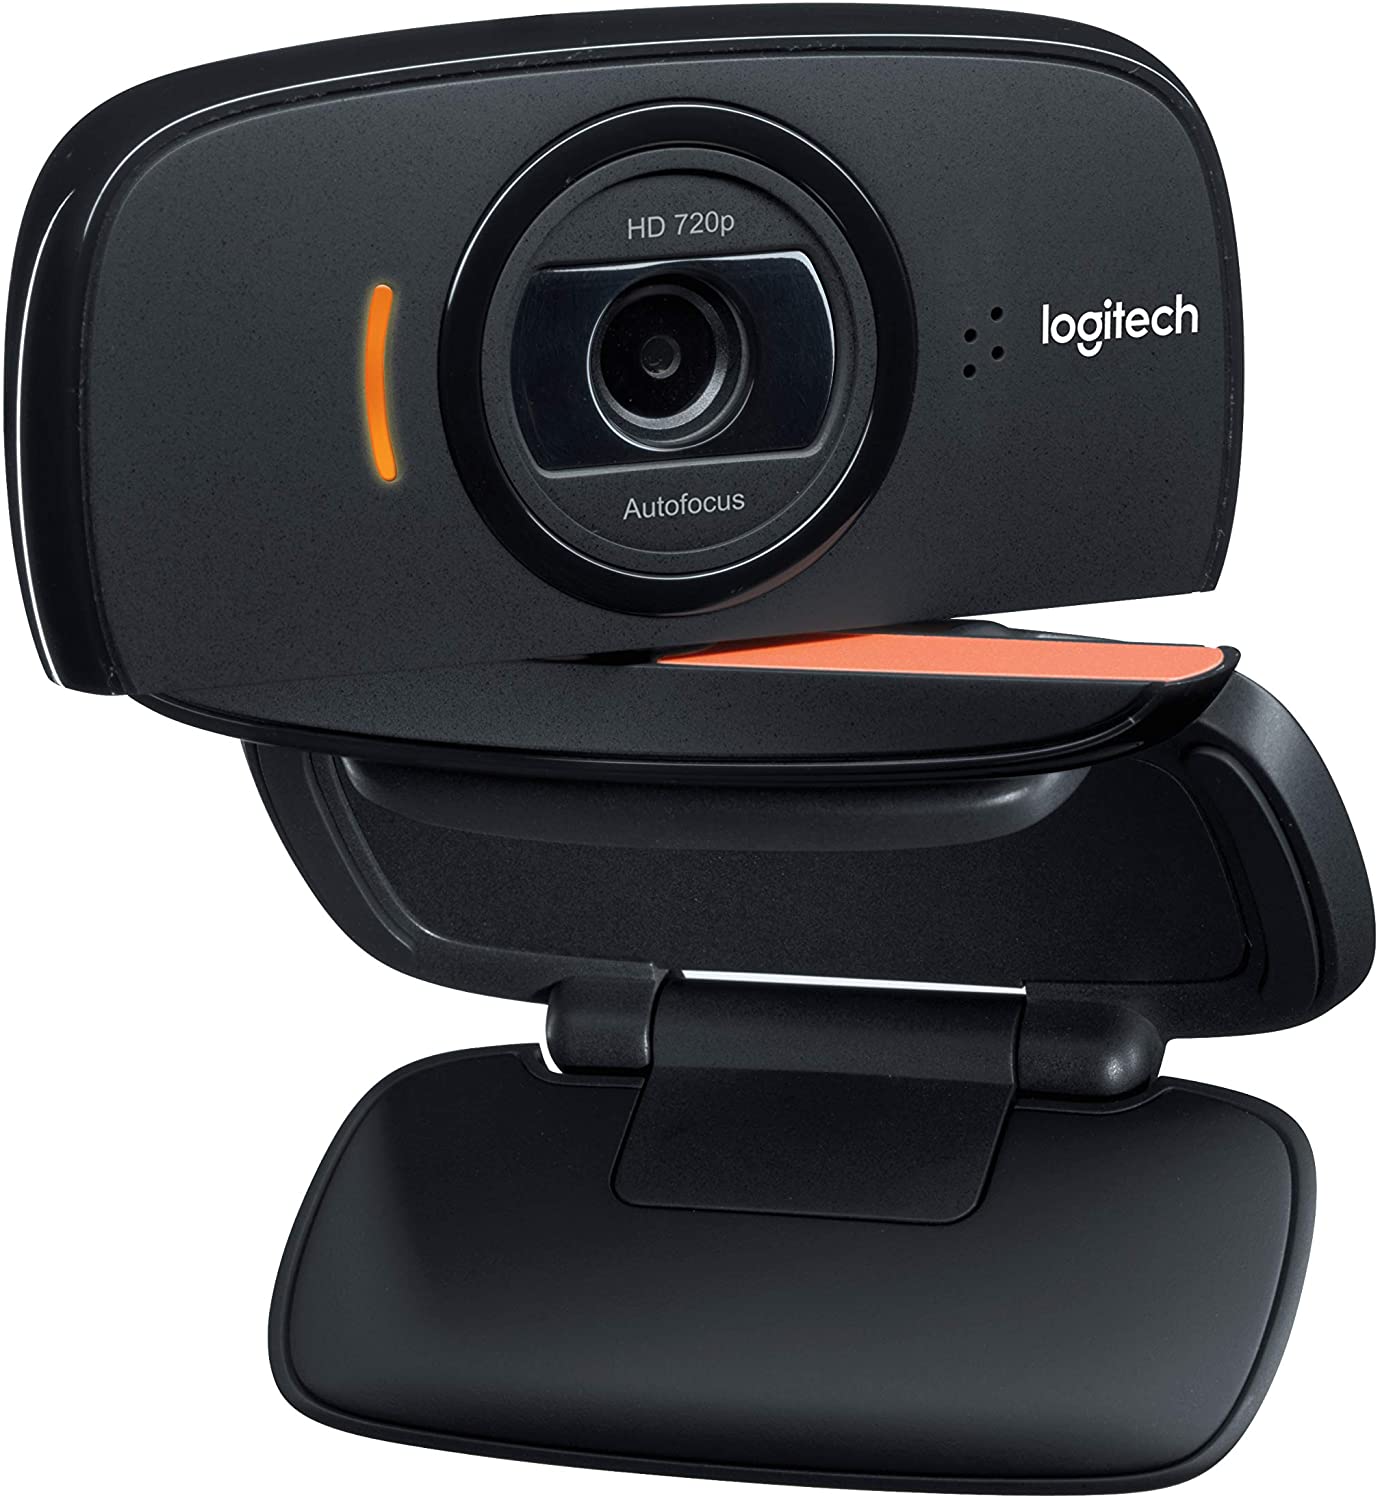 Logitech B525 HD Webcam - 720p